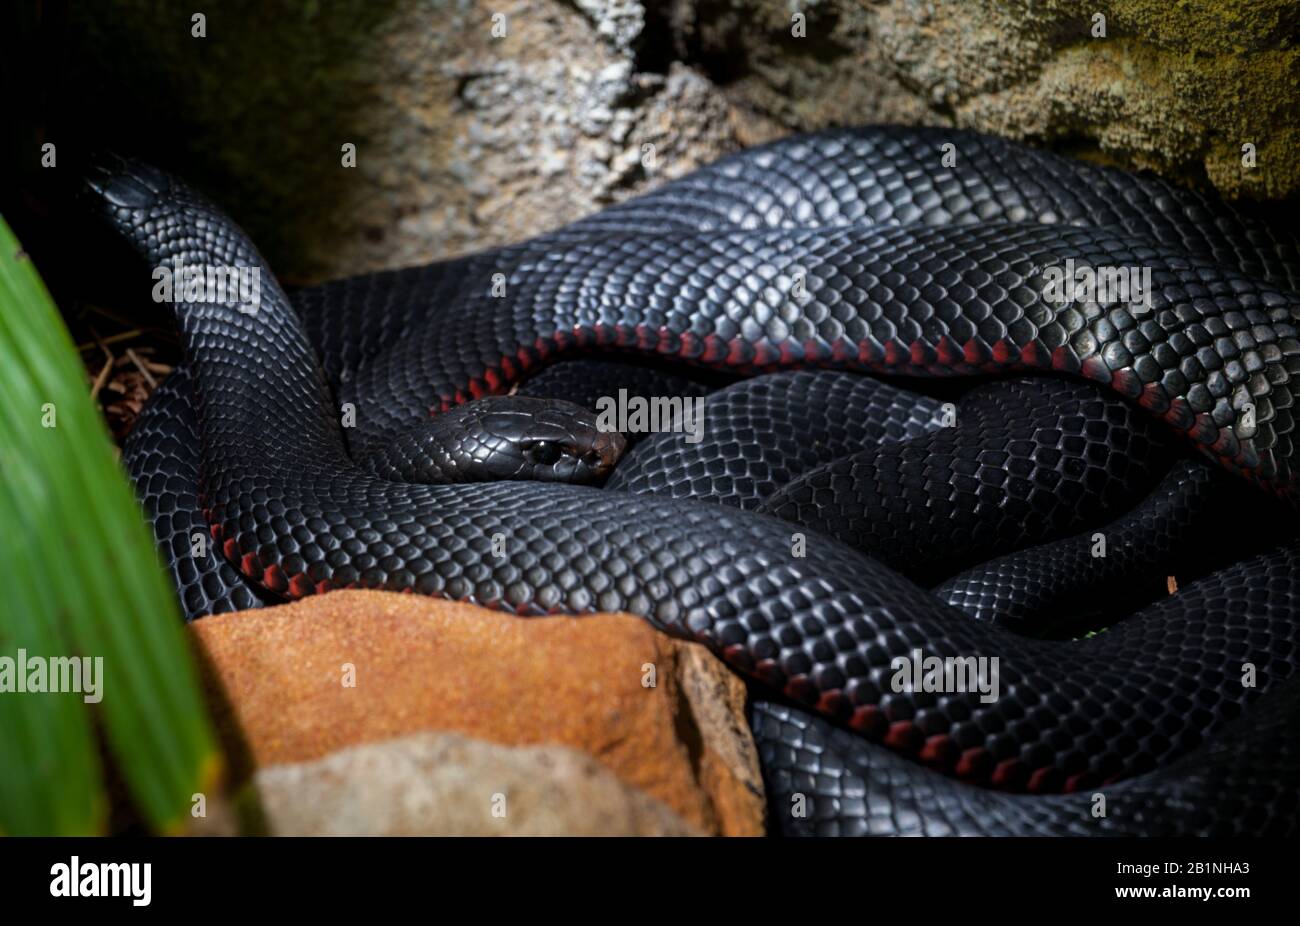 red belly black snake from Australia Stock Photo